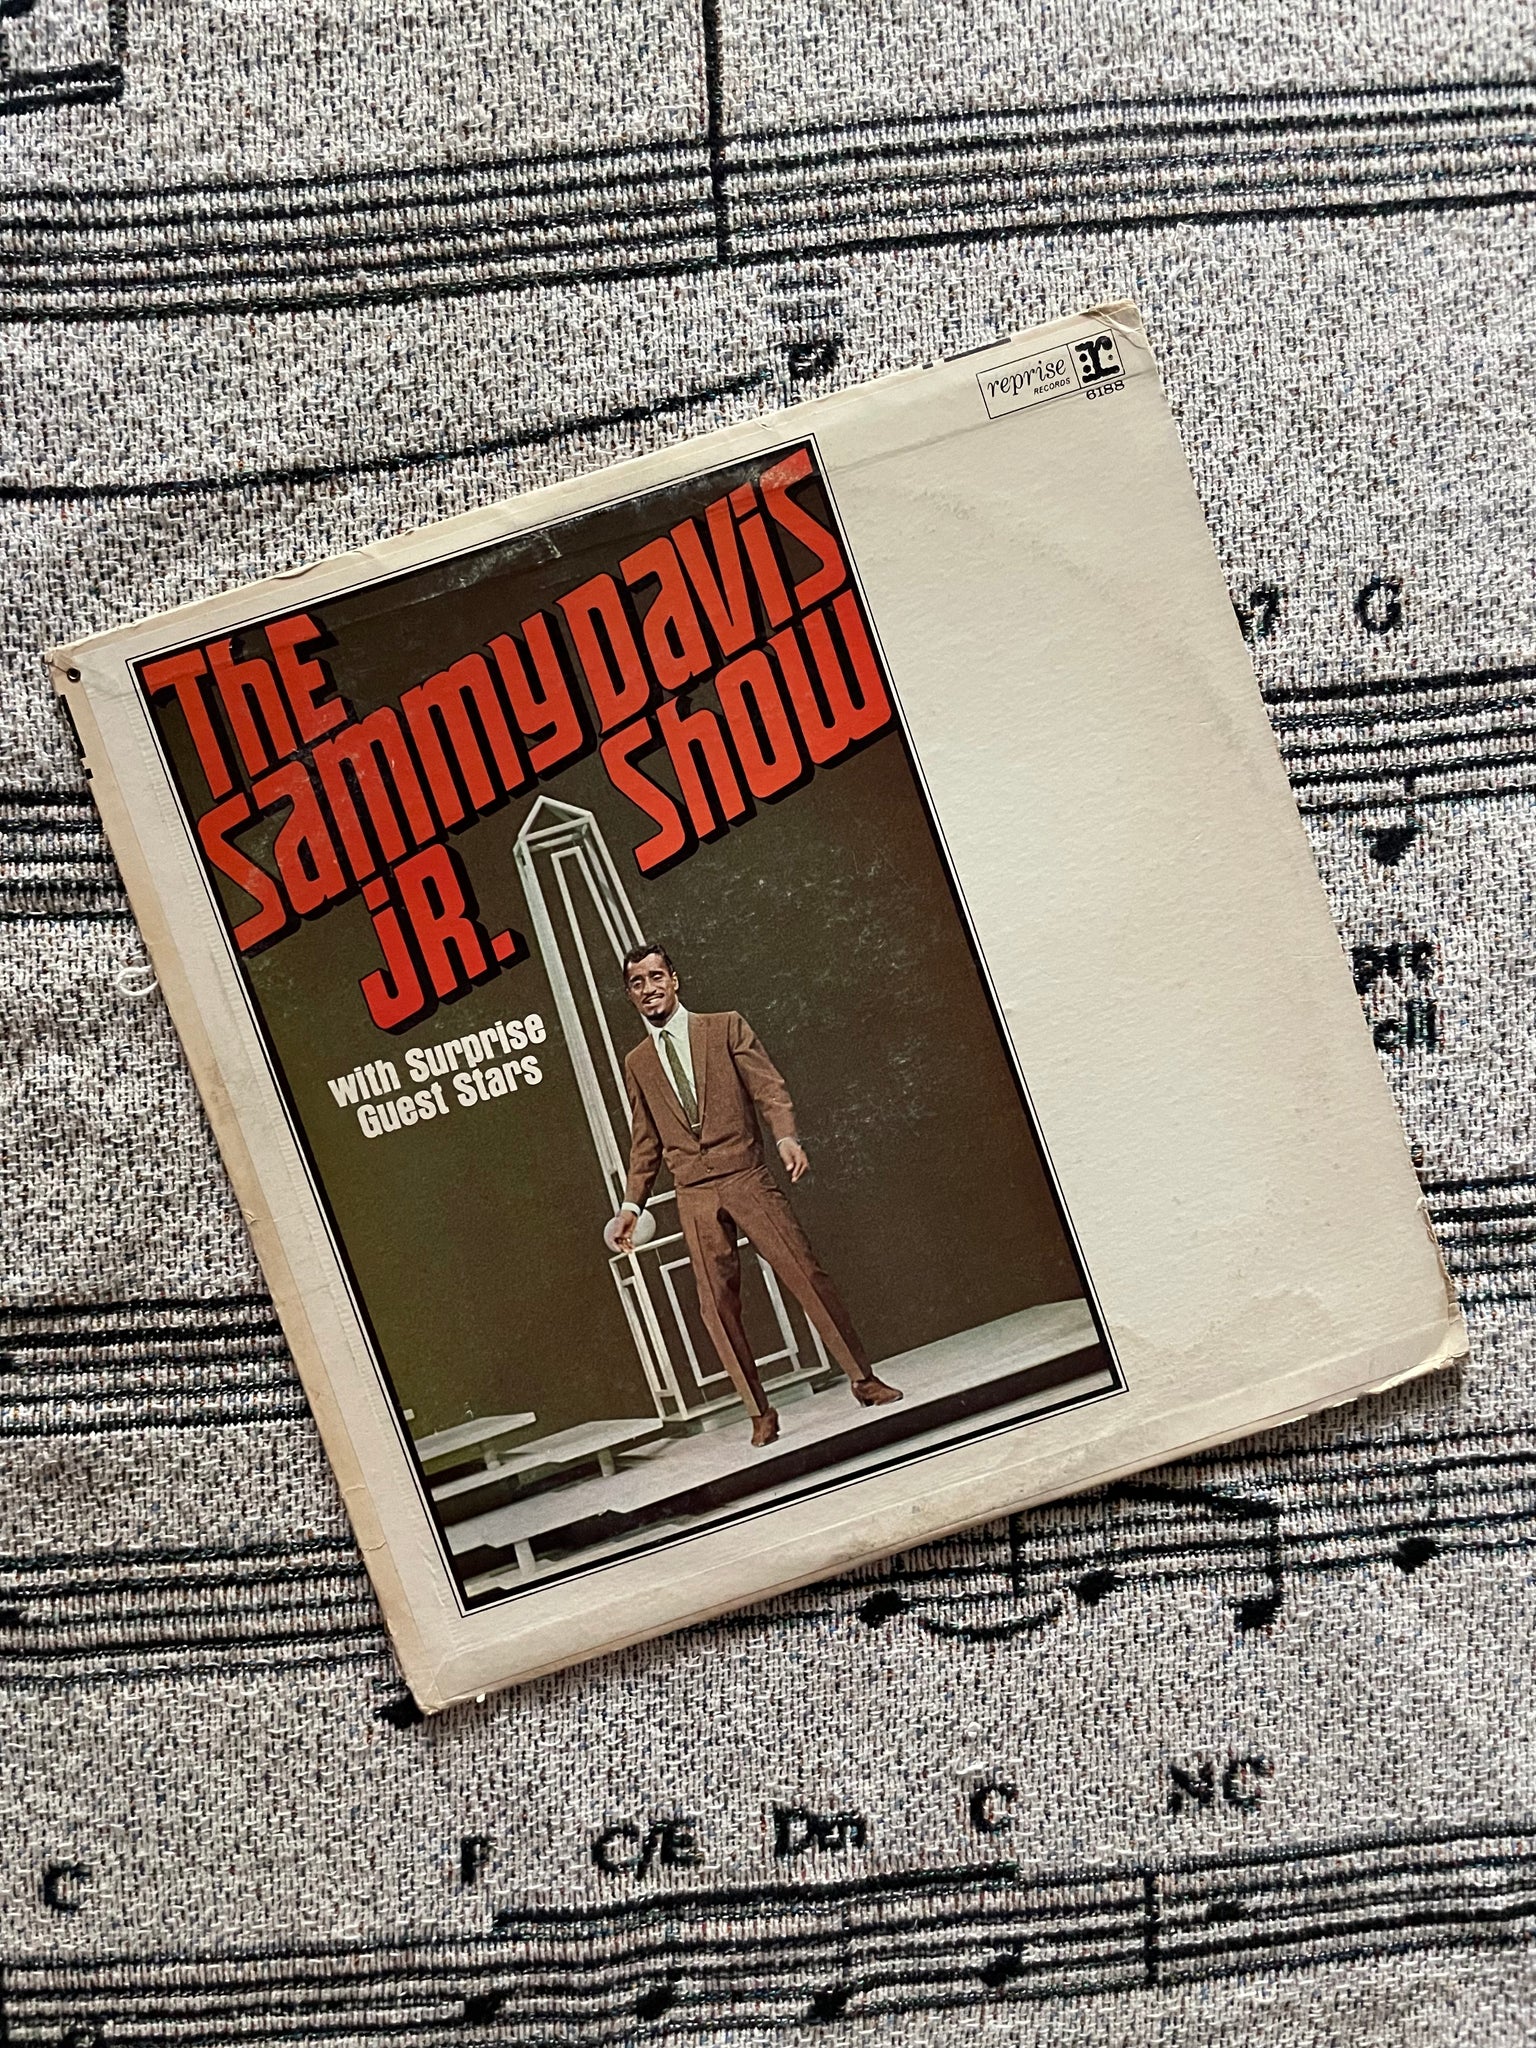 Vintage Assorted Sammy Davis Jr.  Vinyl Records